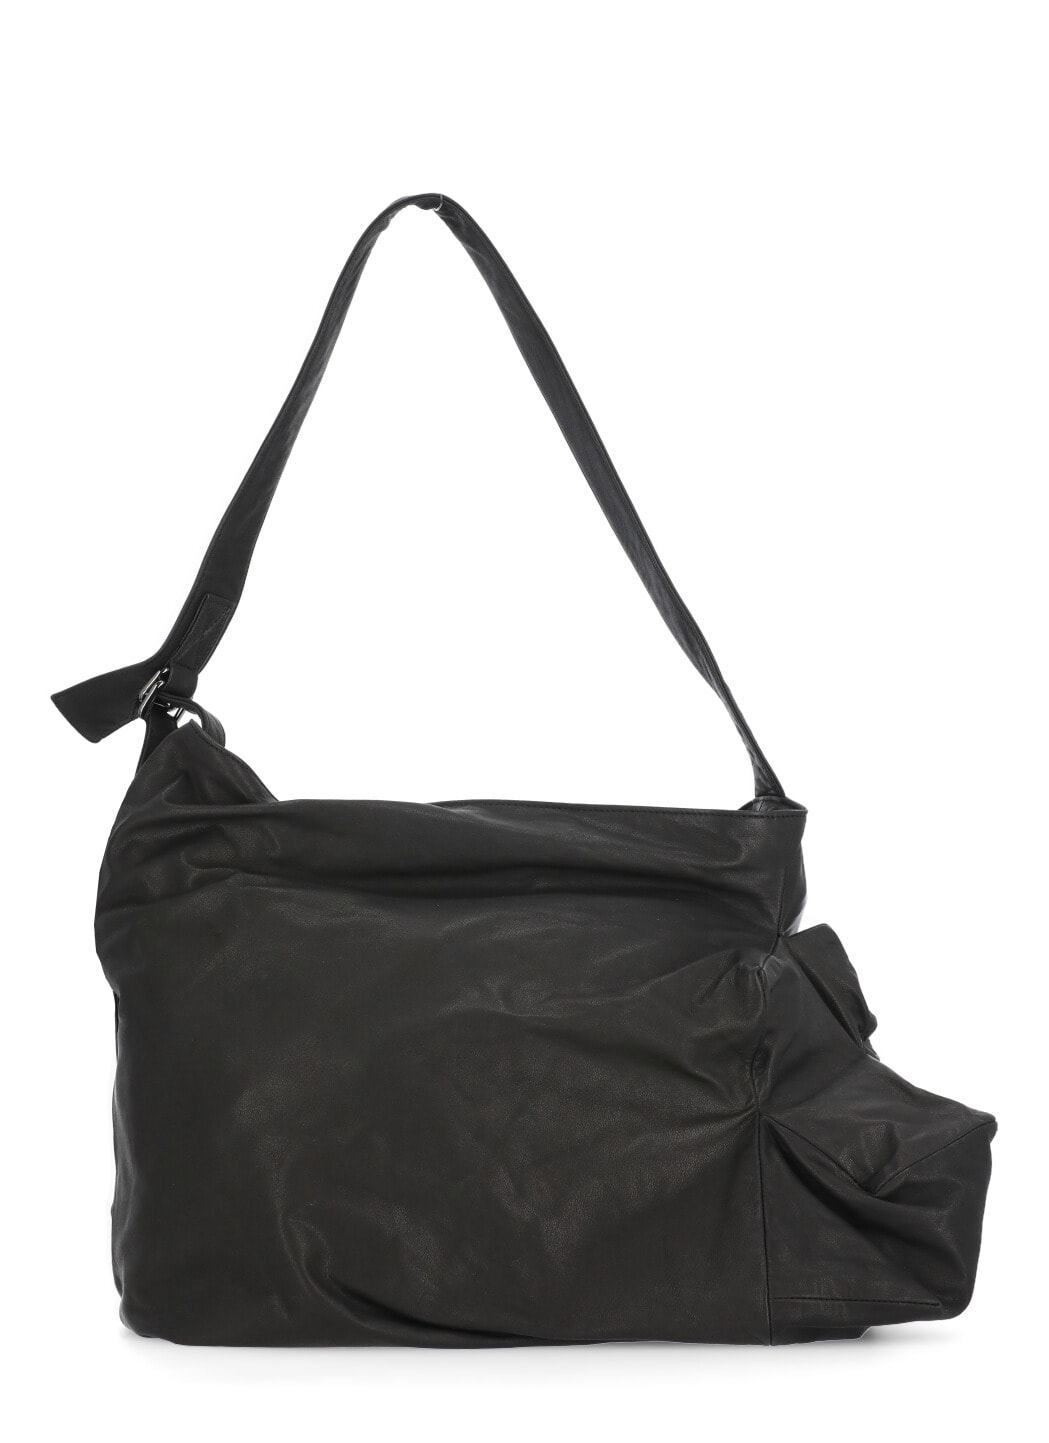 Discord Yohji Yamamoto Leather Shoulder Bag In Black